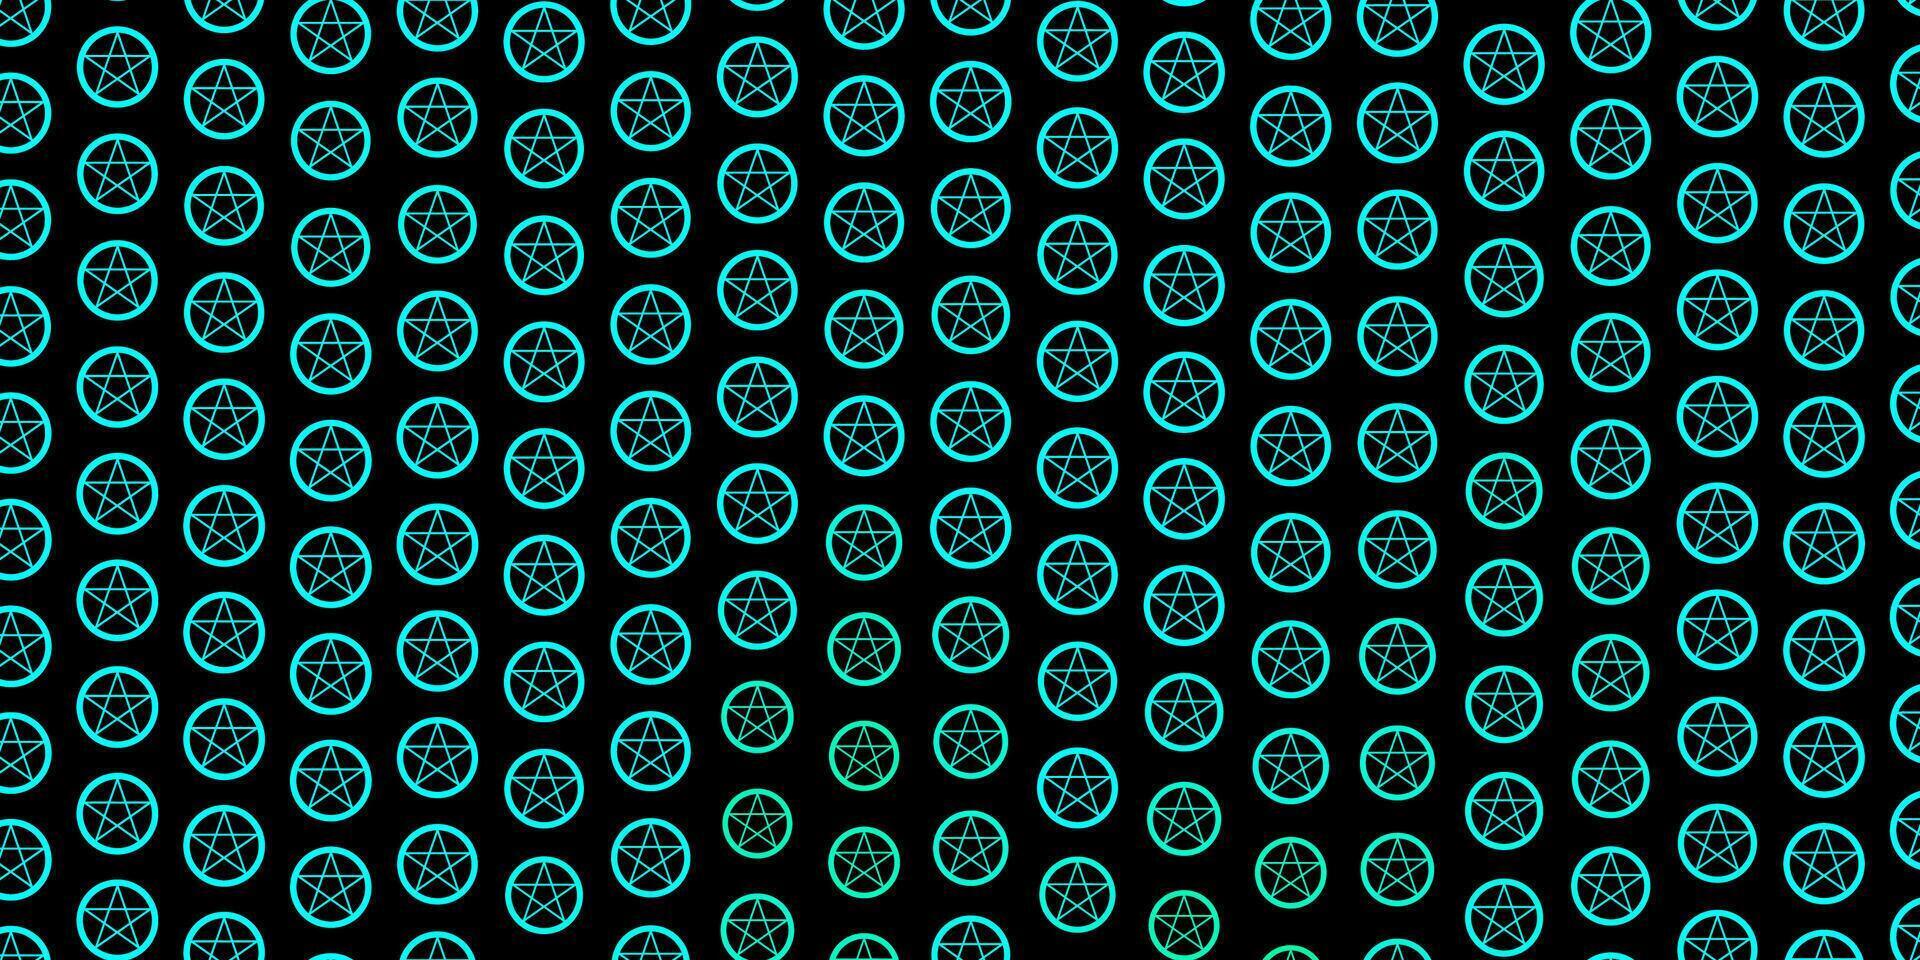 Dark Green vector texture with religion symbols.